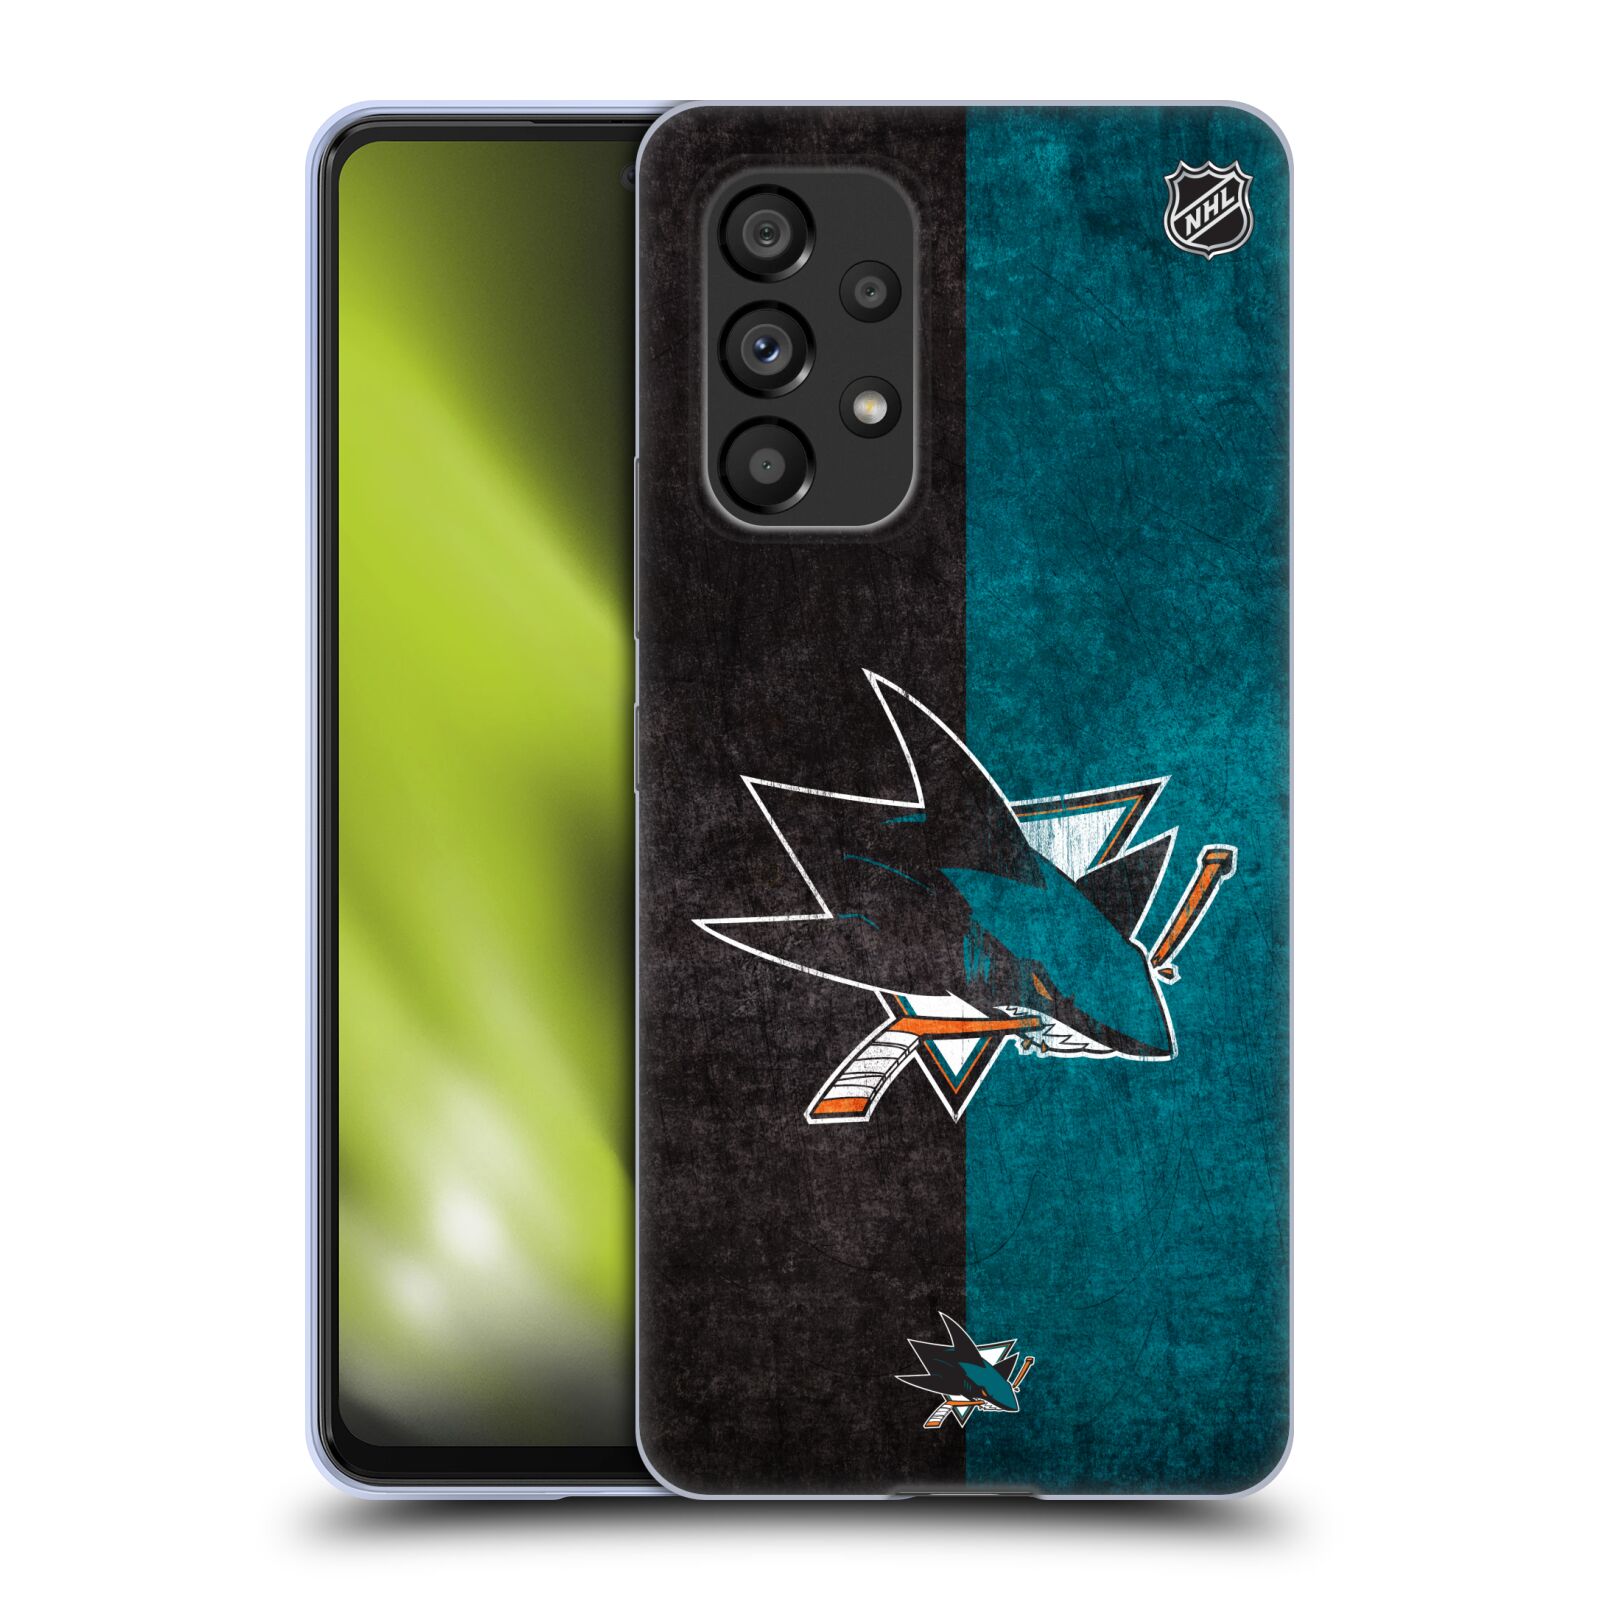 Silikonové pouzdro na mobil Samsung Galaxy A53 5G - NHL - Půlené logo San Jose Sharks (Silikonový kryt, obal, pouzdro na mobilní telefon Samsung Galaxy A53 5G s licencovaným motivem NHL - Půlené logo San Jose Sharks)